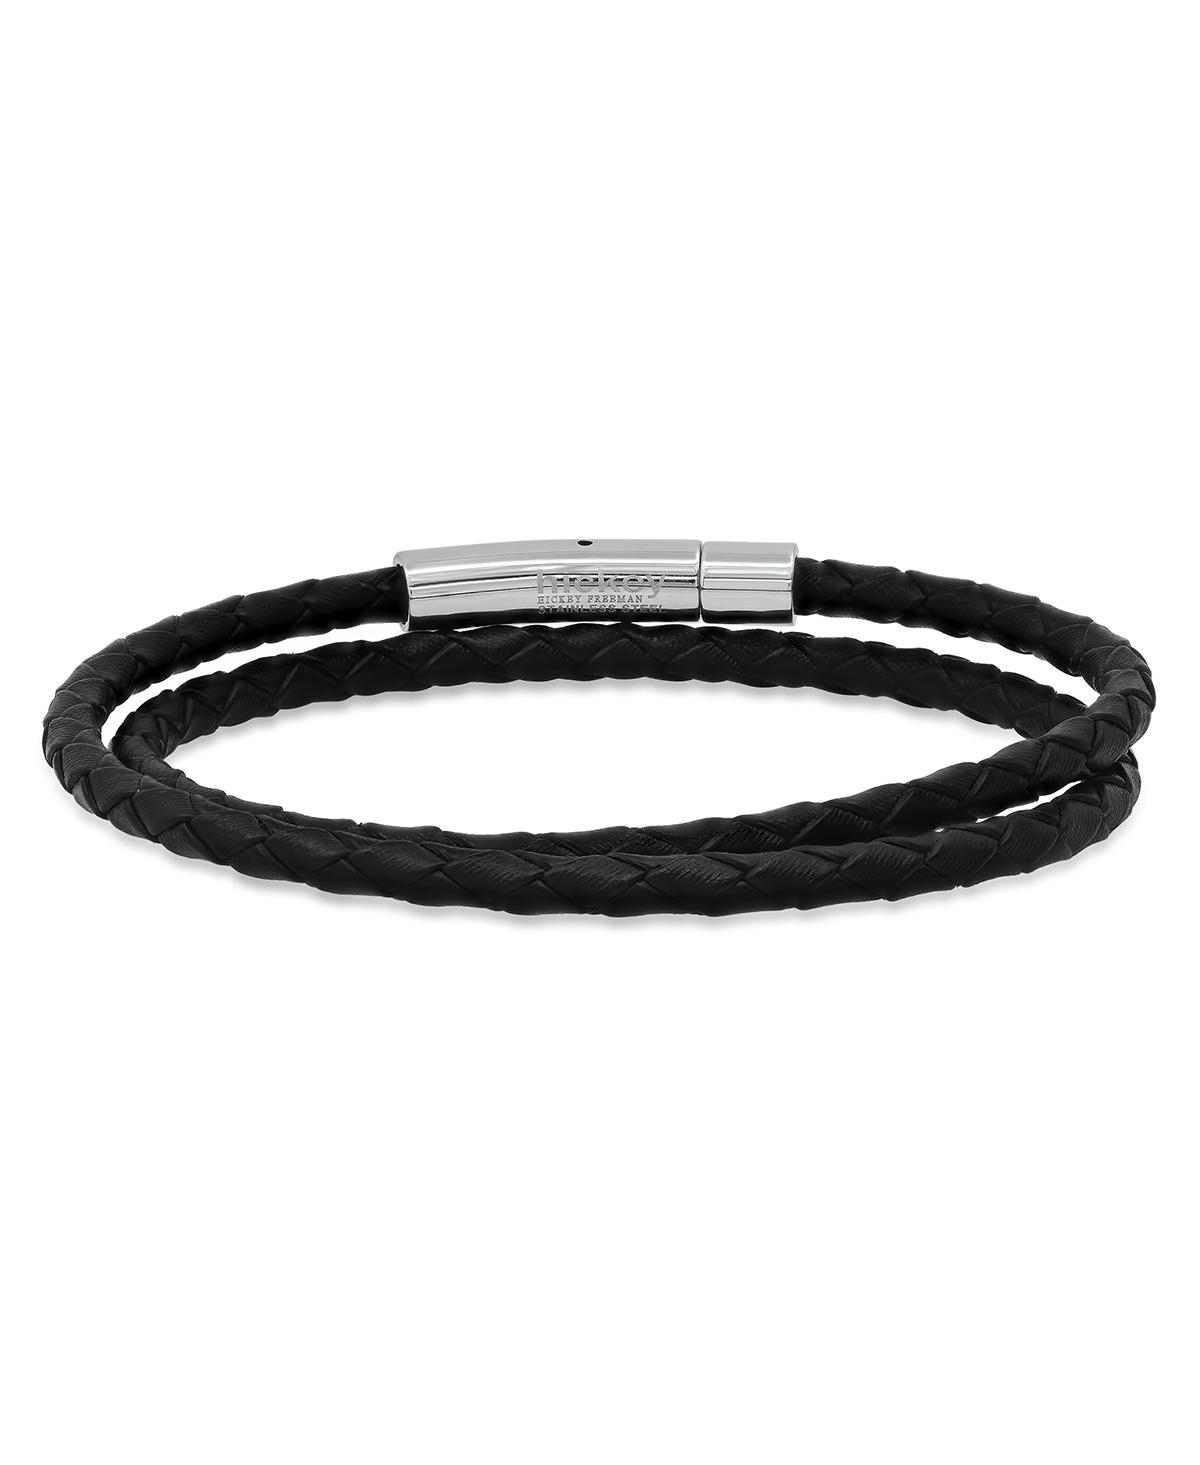 Hmy Jewelry Stainless Steel Leather Braided Bracelet In Steel/ Black